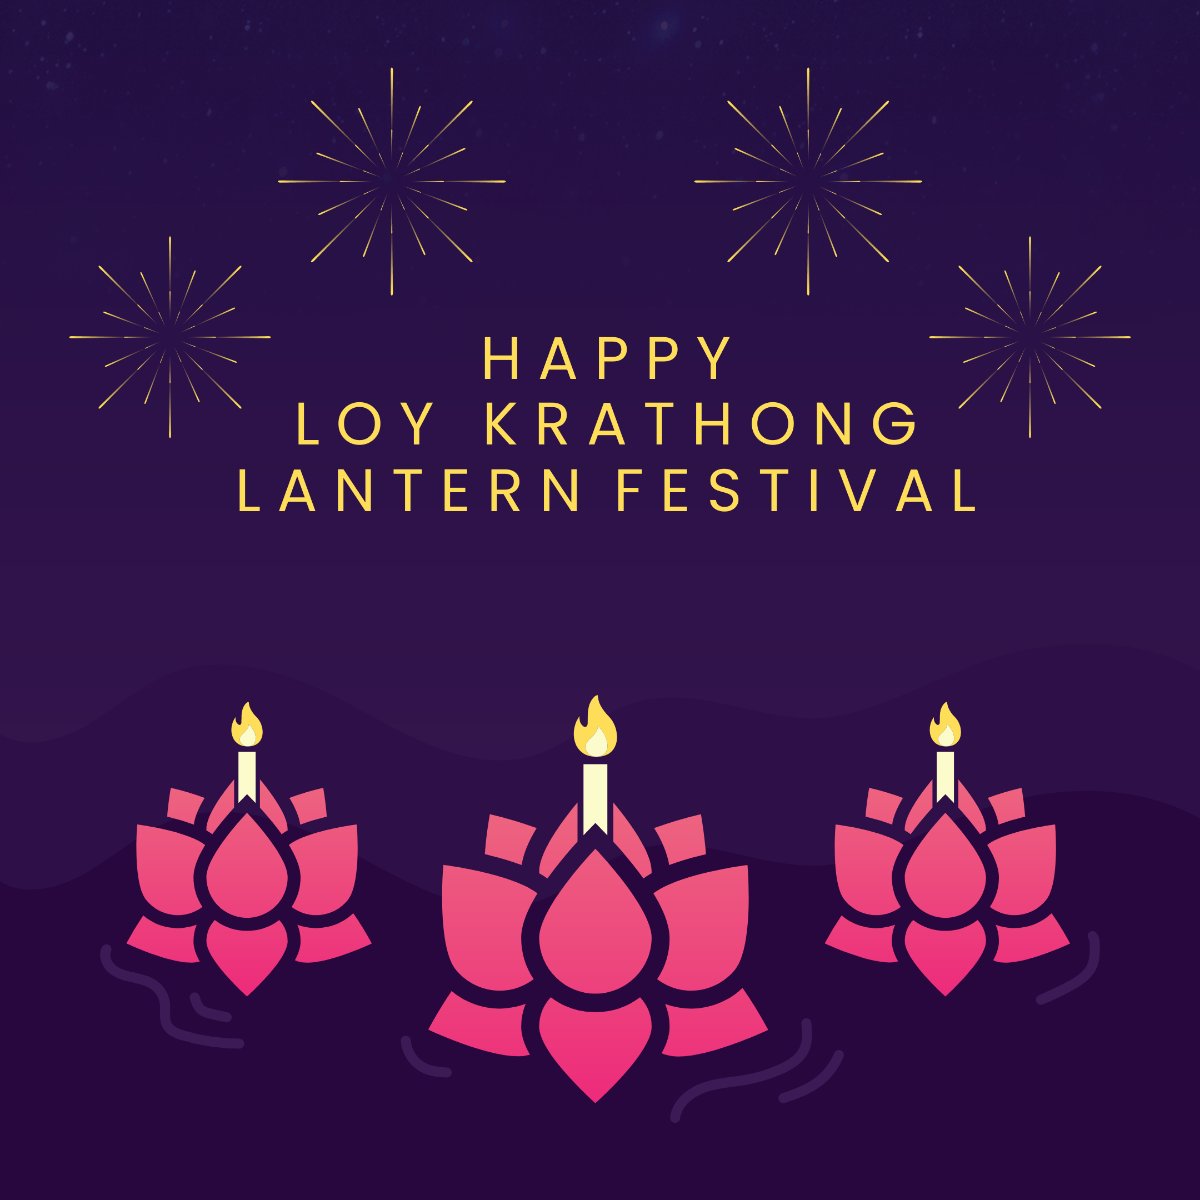 Loy Krathong Lantern Festival Instagram Post